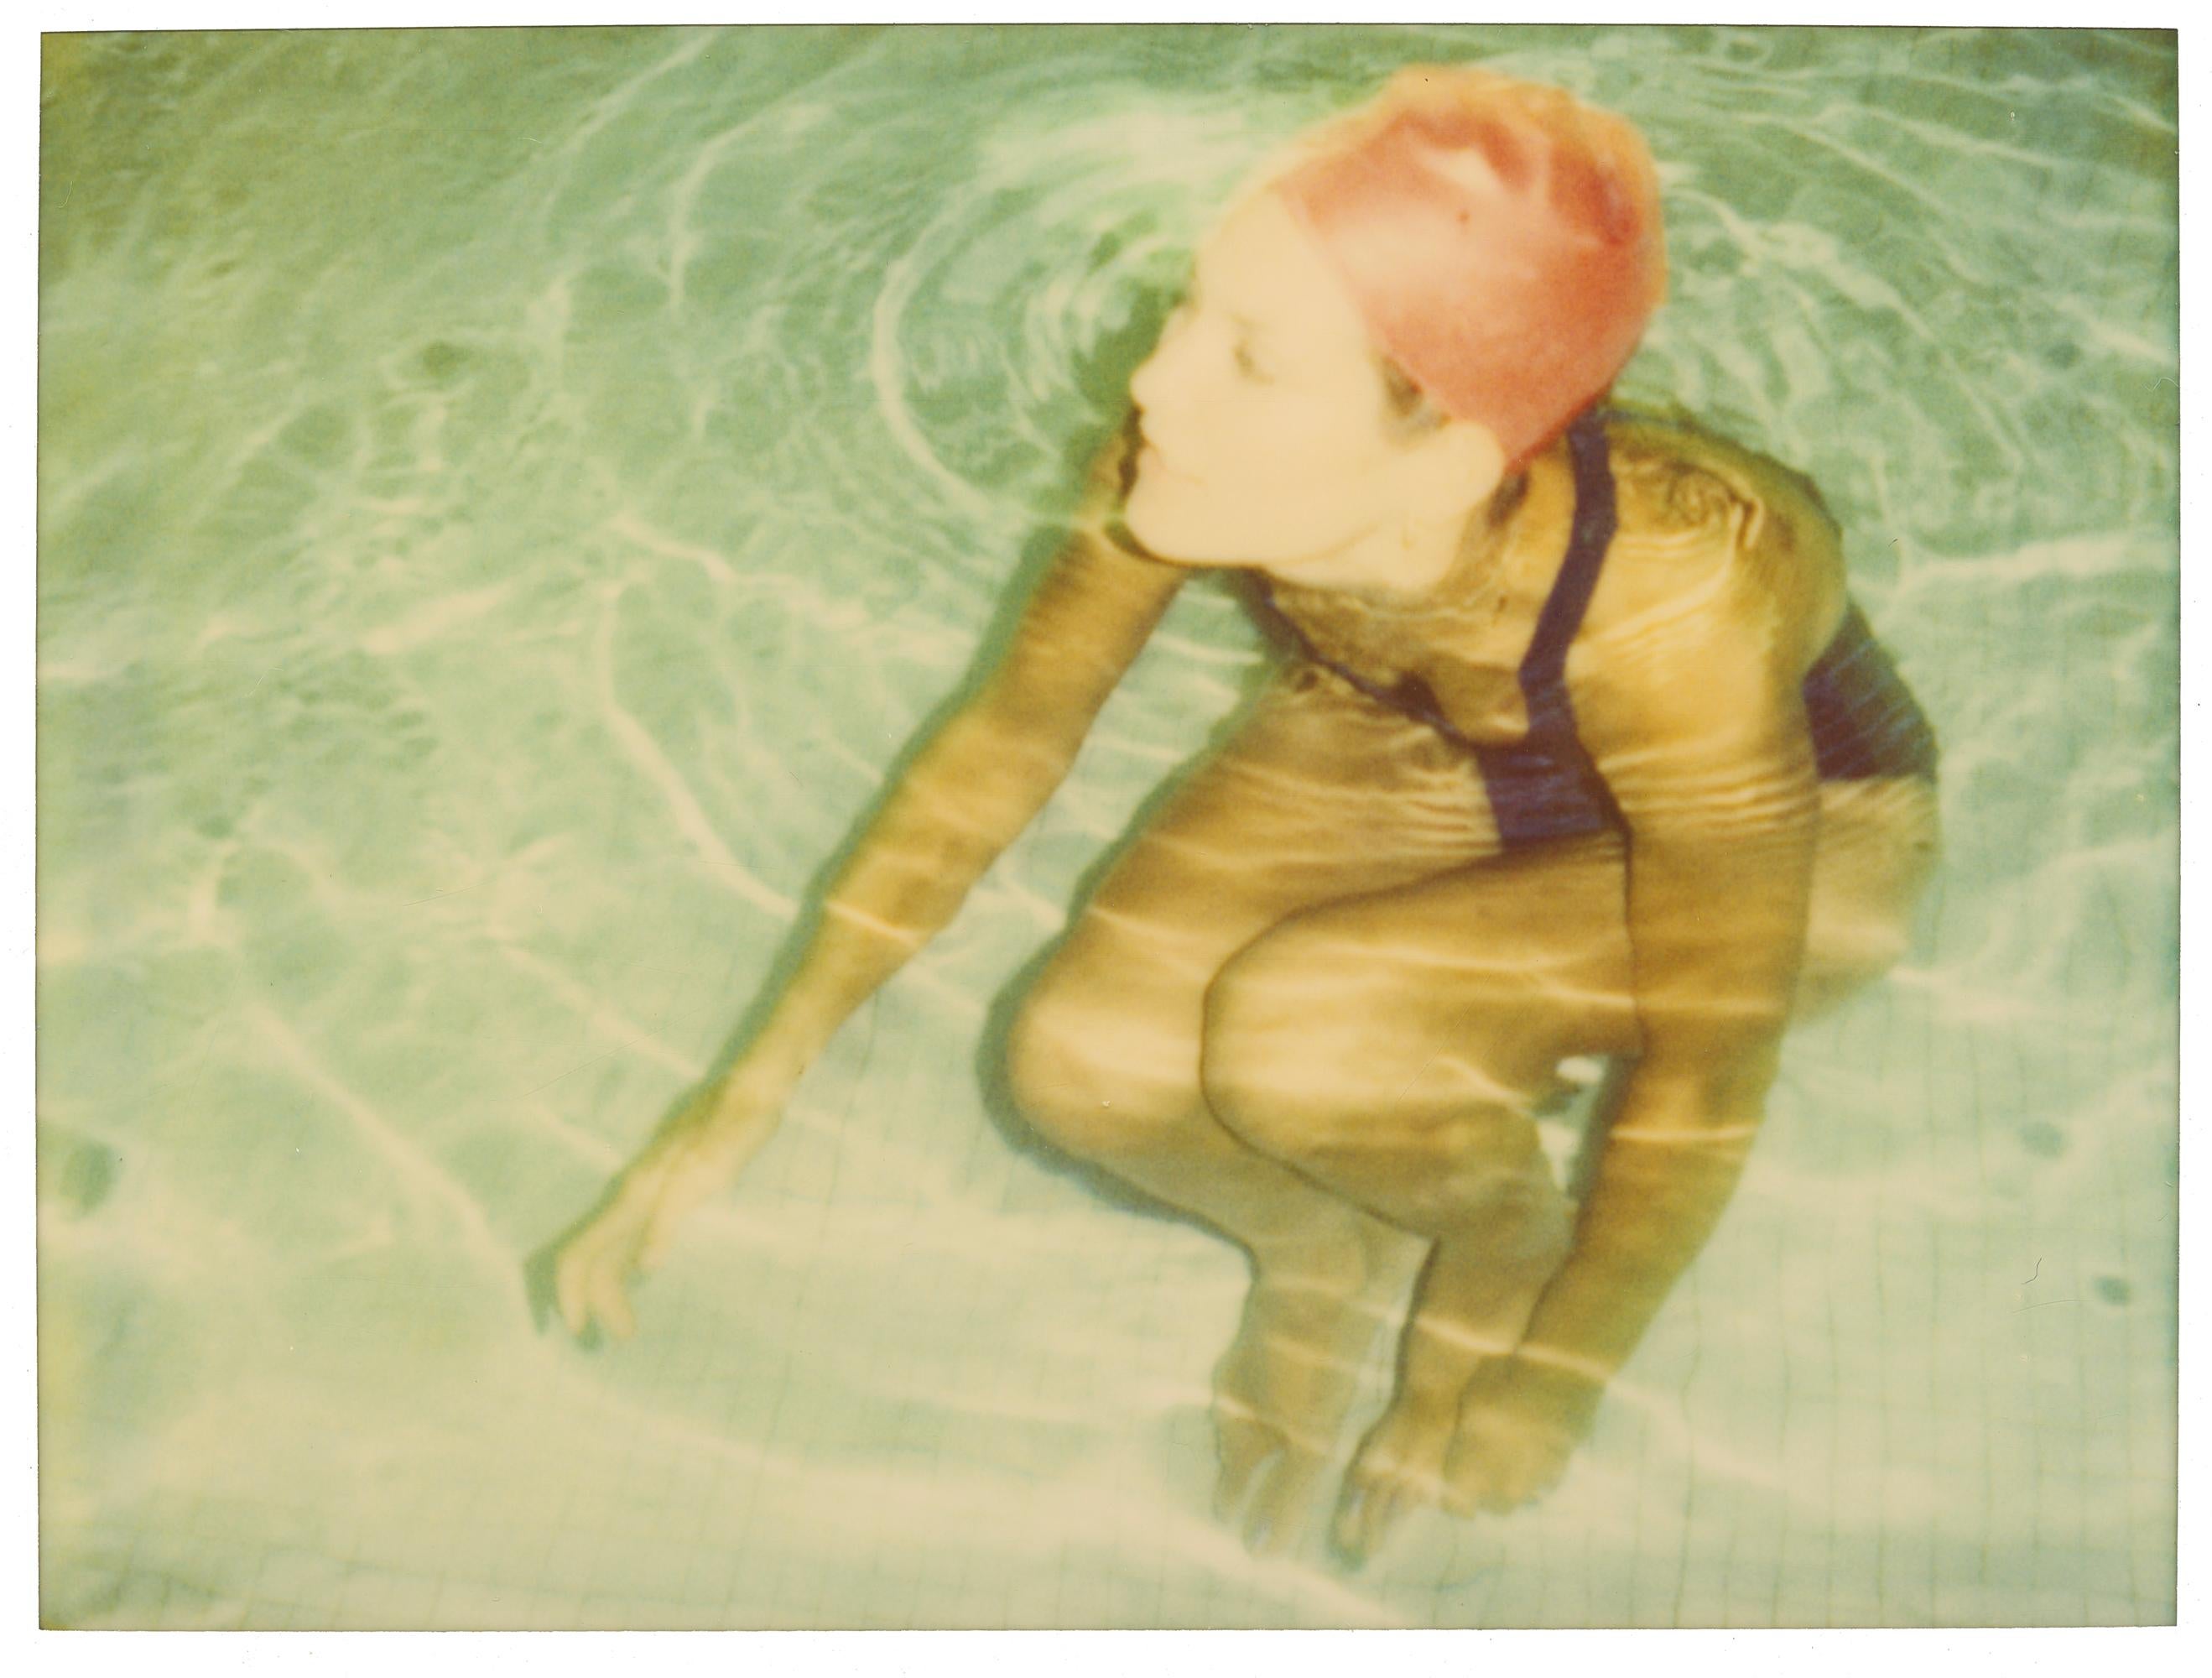 Stefanie Schneider Portrait Photograph - Pool Time (Suburbia) - Contemporary, Polaroid, Analog, Photography